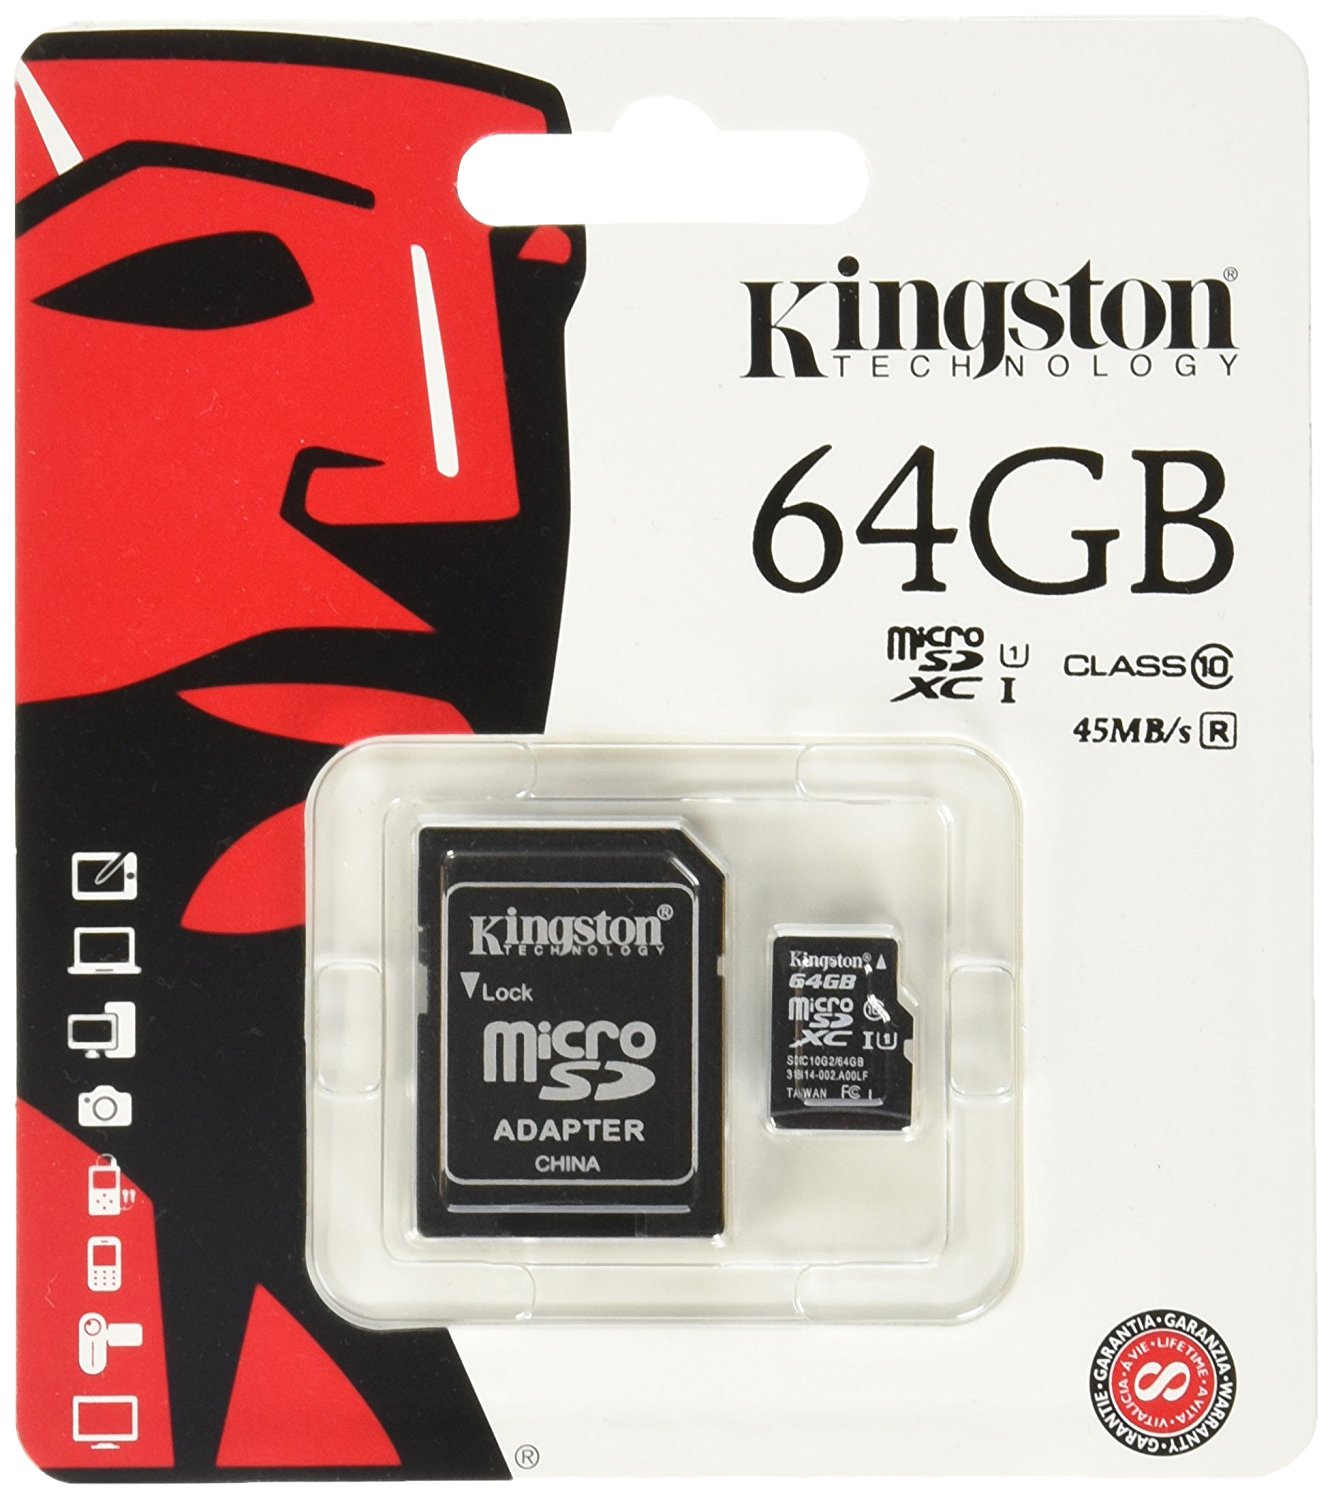 KINGSTON 64 GB Micro SDHC Memory Card with Adaptor